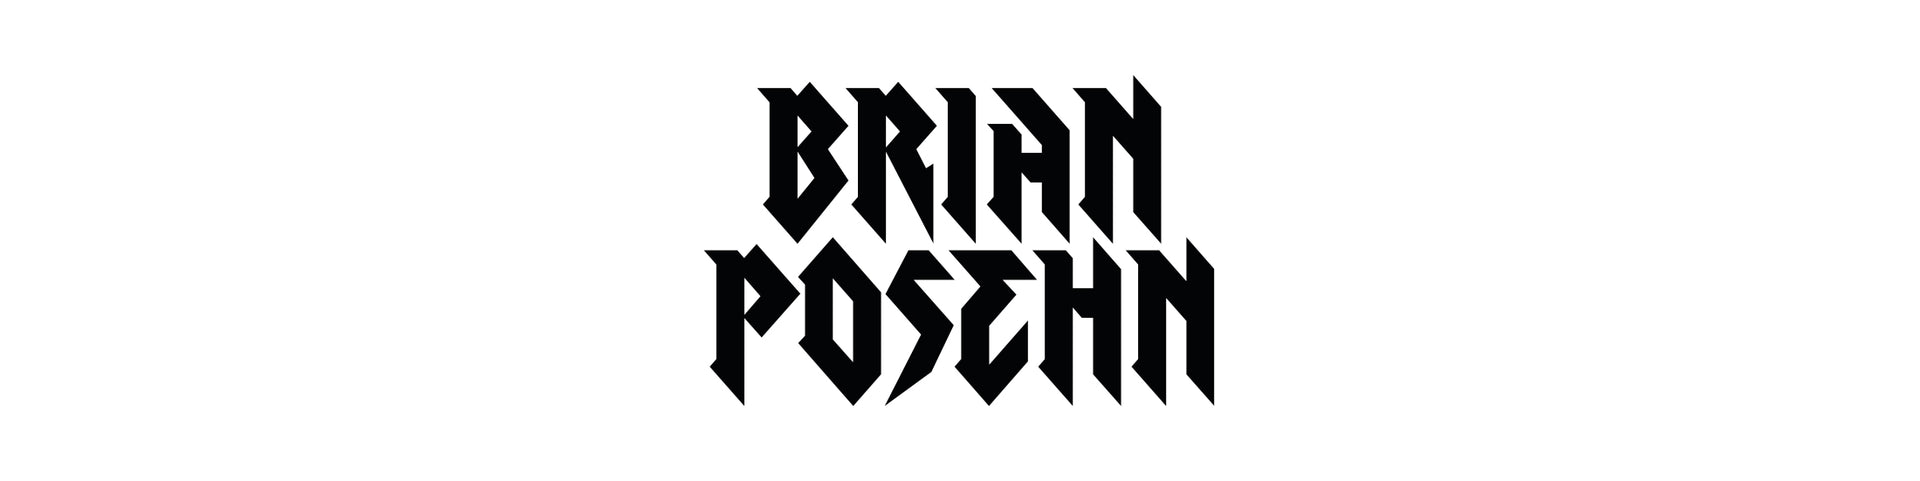 Brian Posehn